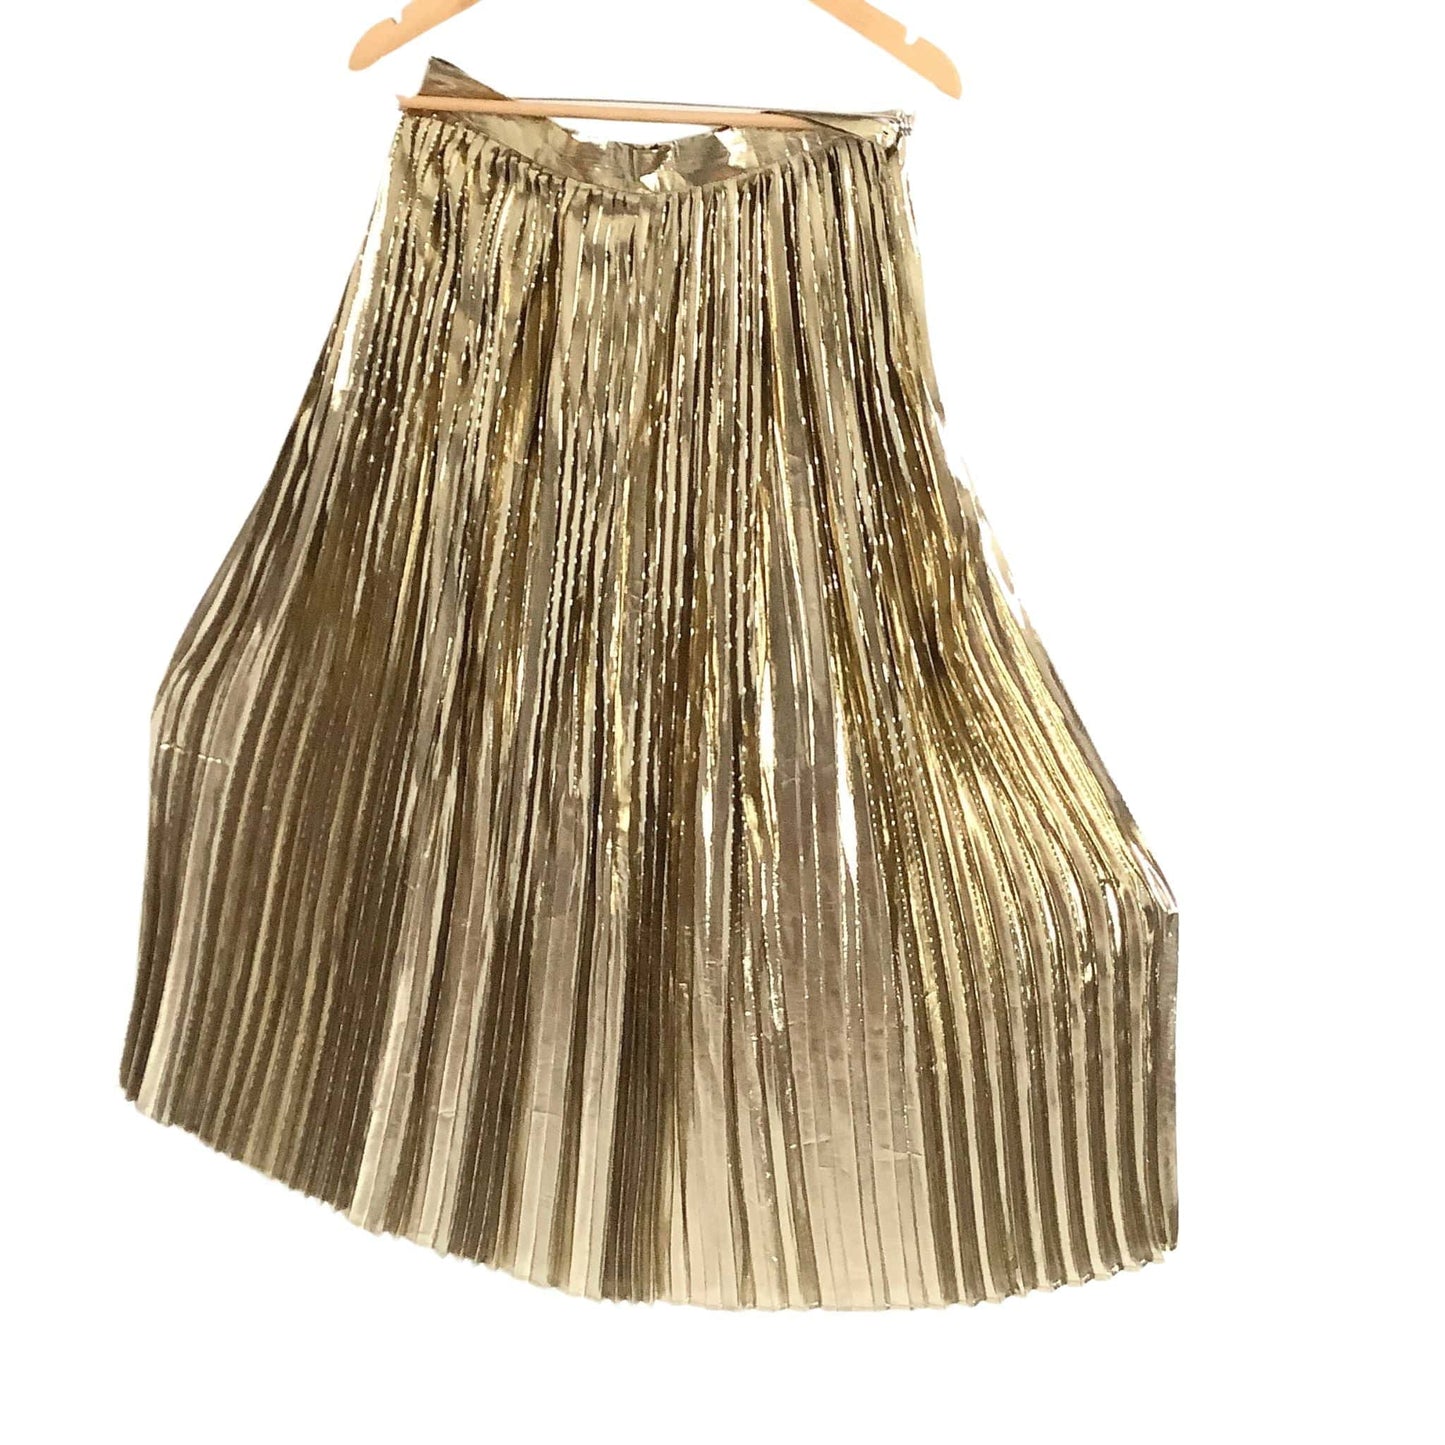 Gold Pleated Maxi Skirt Medium / Gold / Vintage 1980s